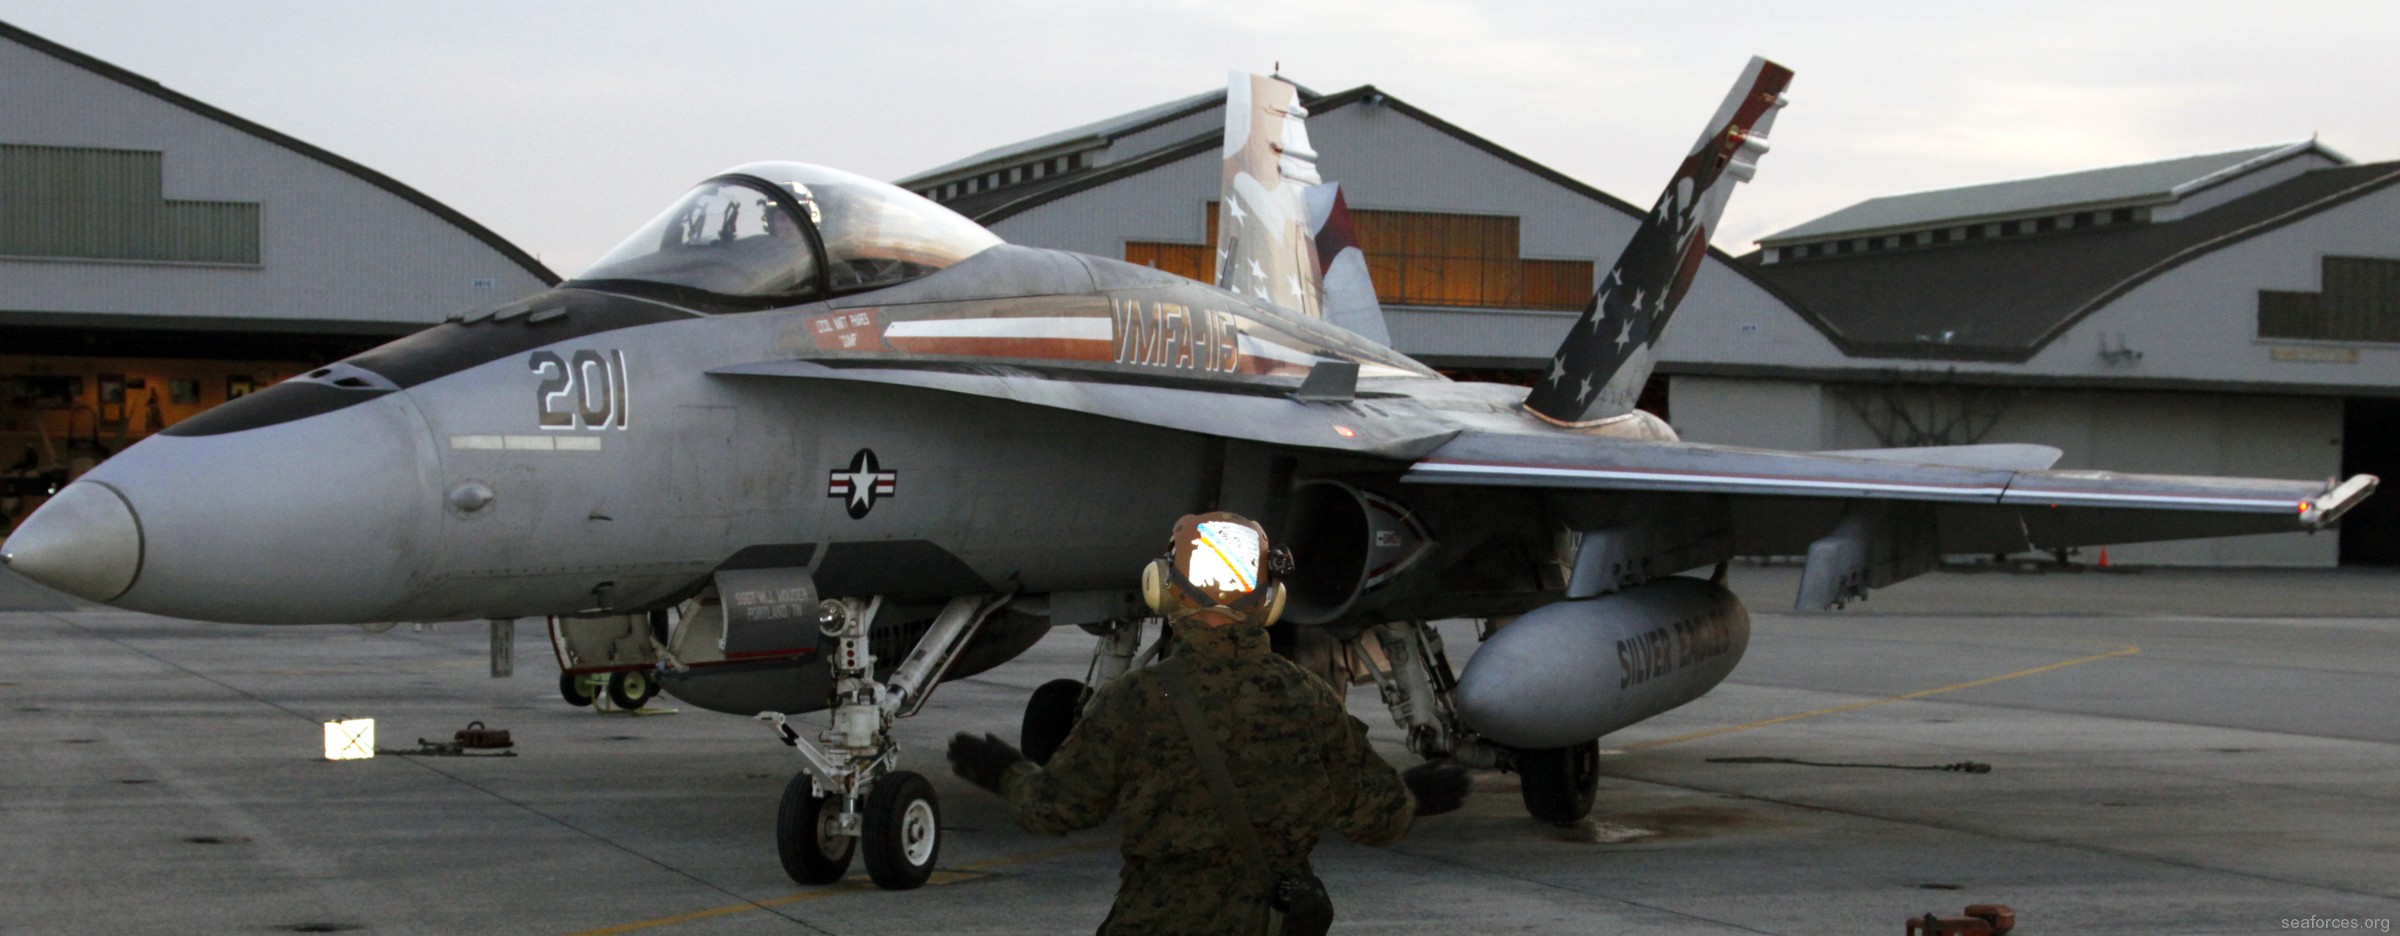 vmfa-115 silver eagles marine fighter attack squadron f/a-18a+ hornet 136 mxas iwakuni japan